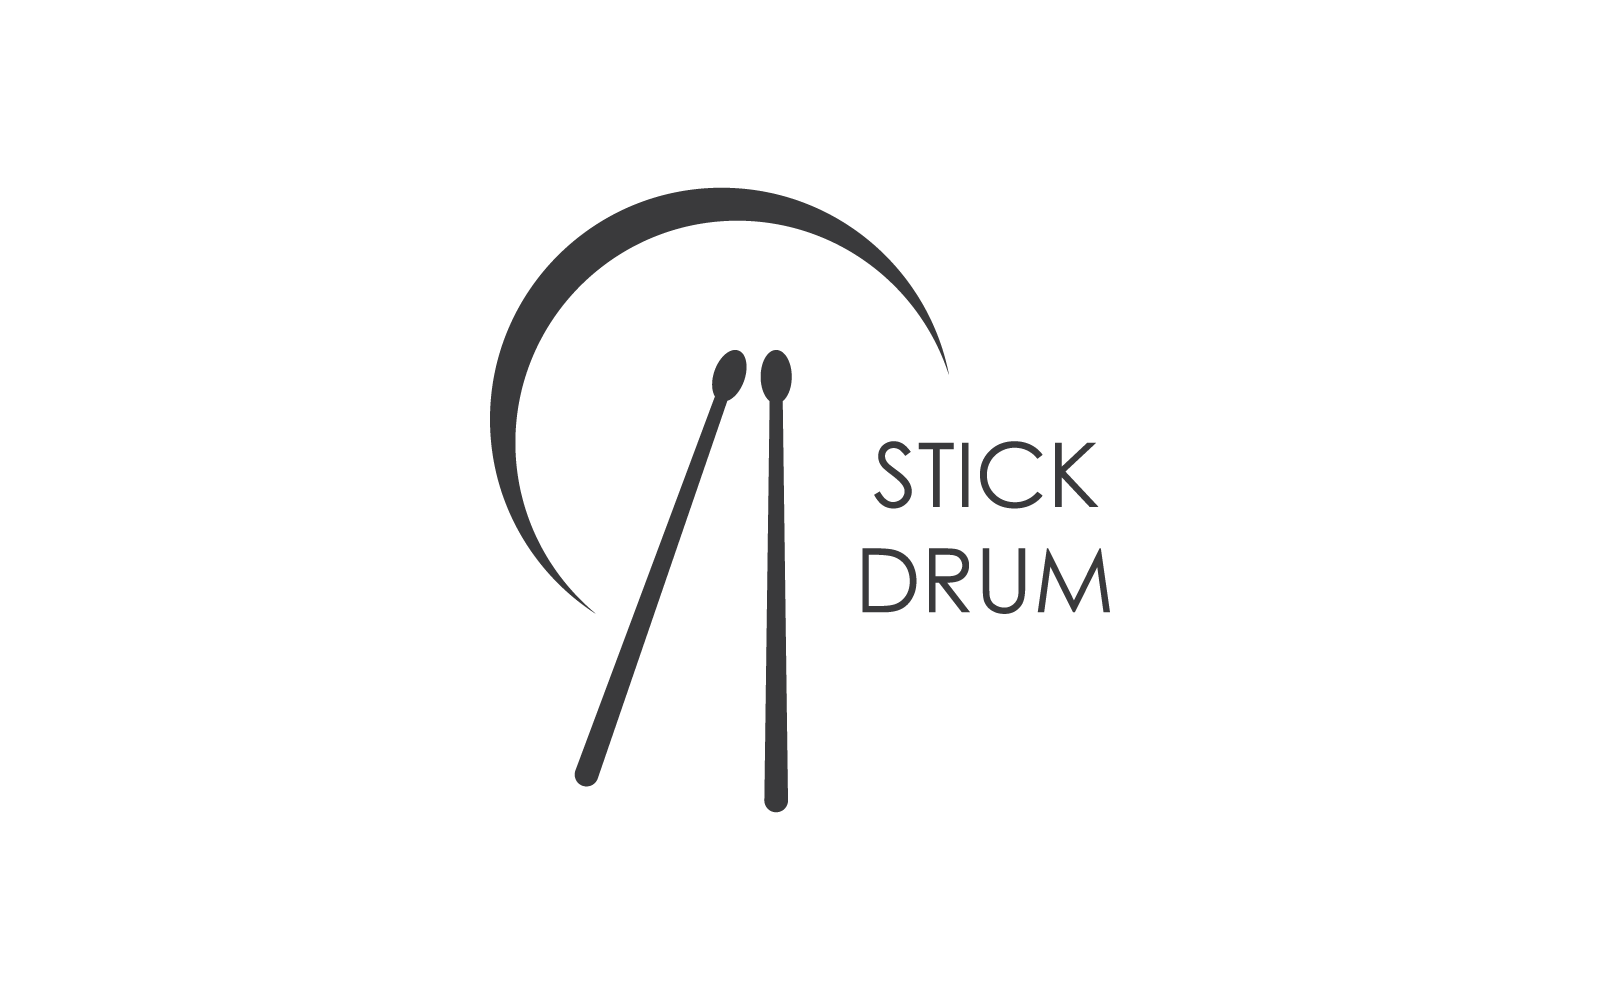 Drum stick illustration icon vector design